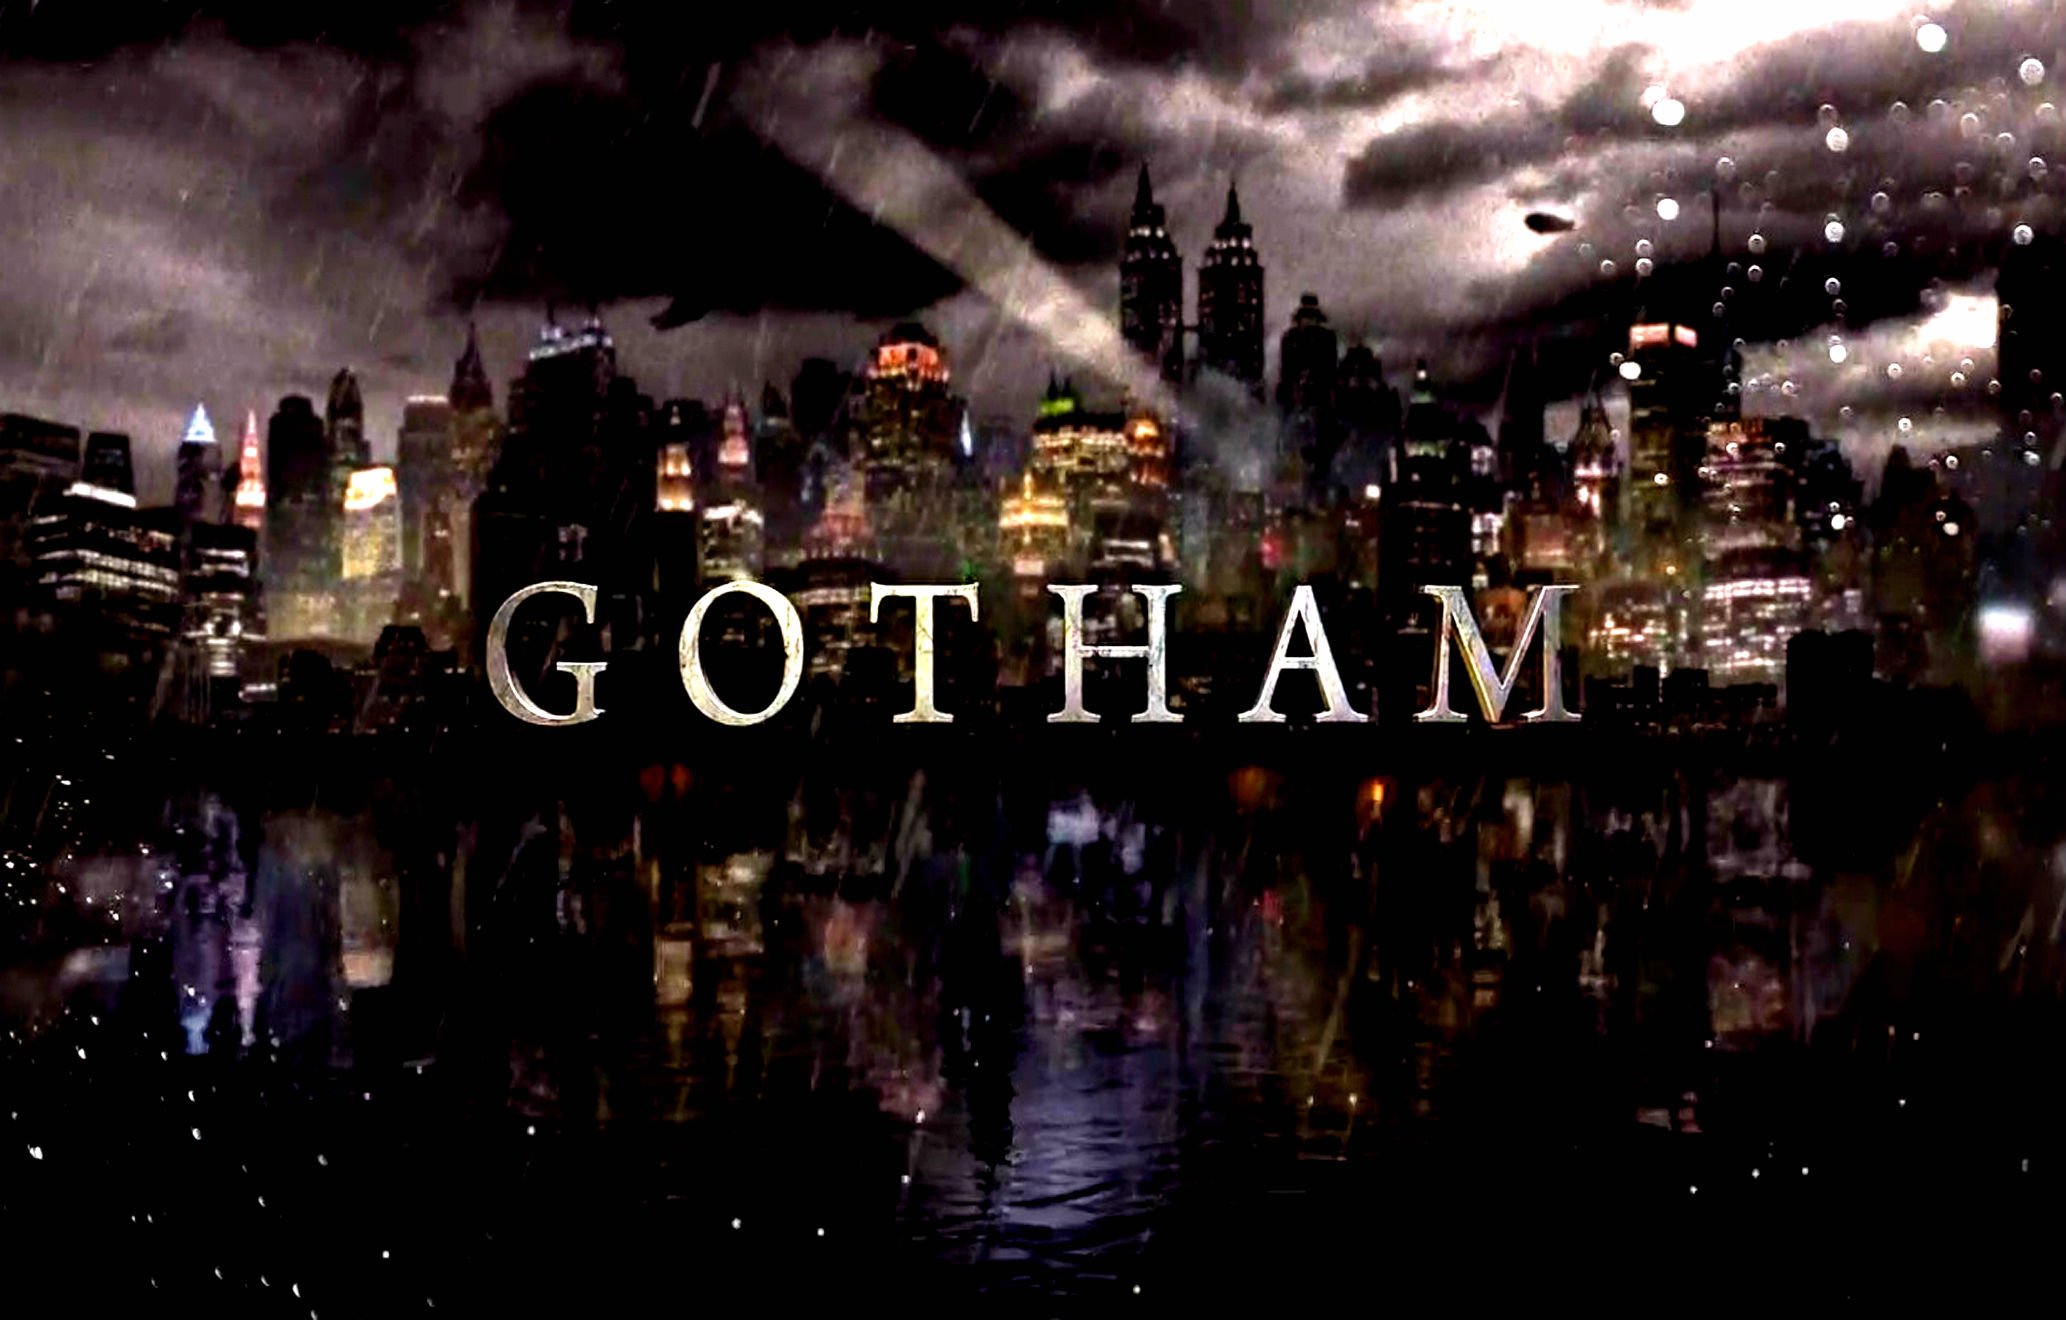 Gotham HD Wallpapers desktop backgrounds